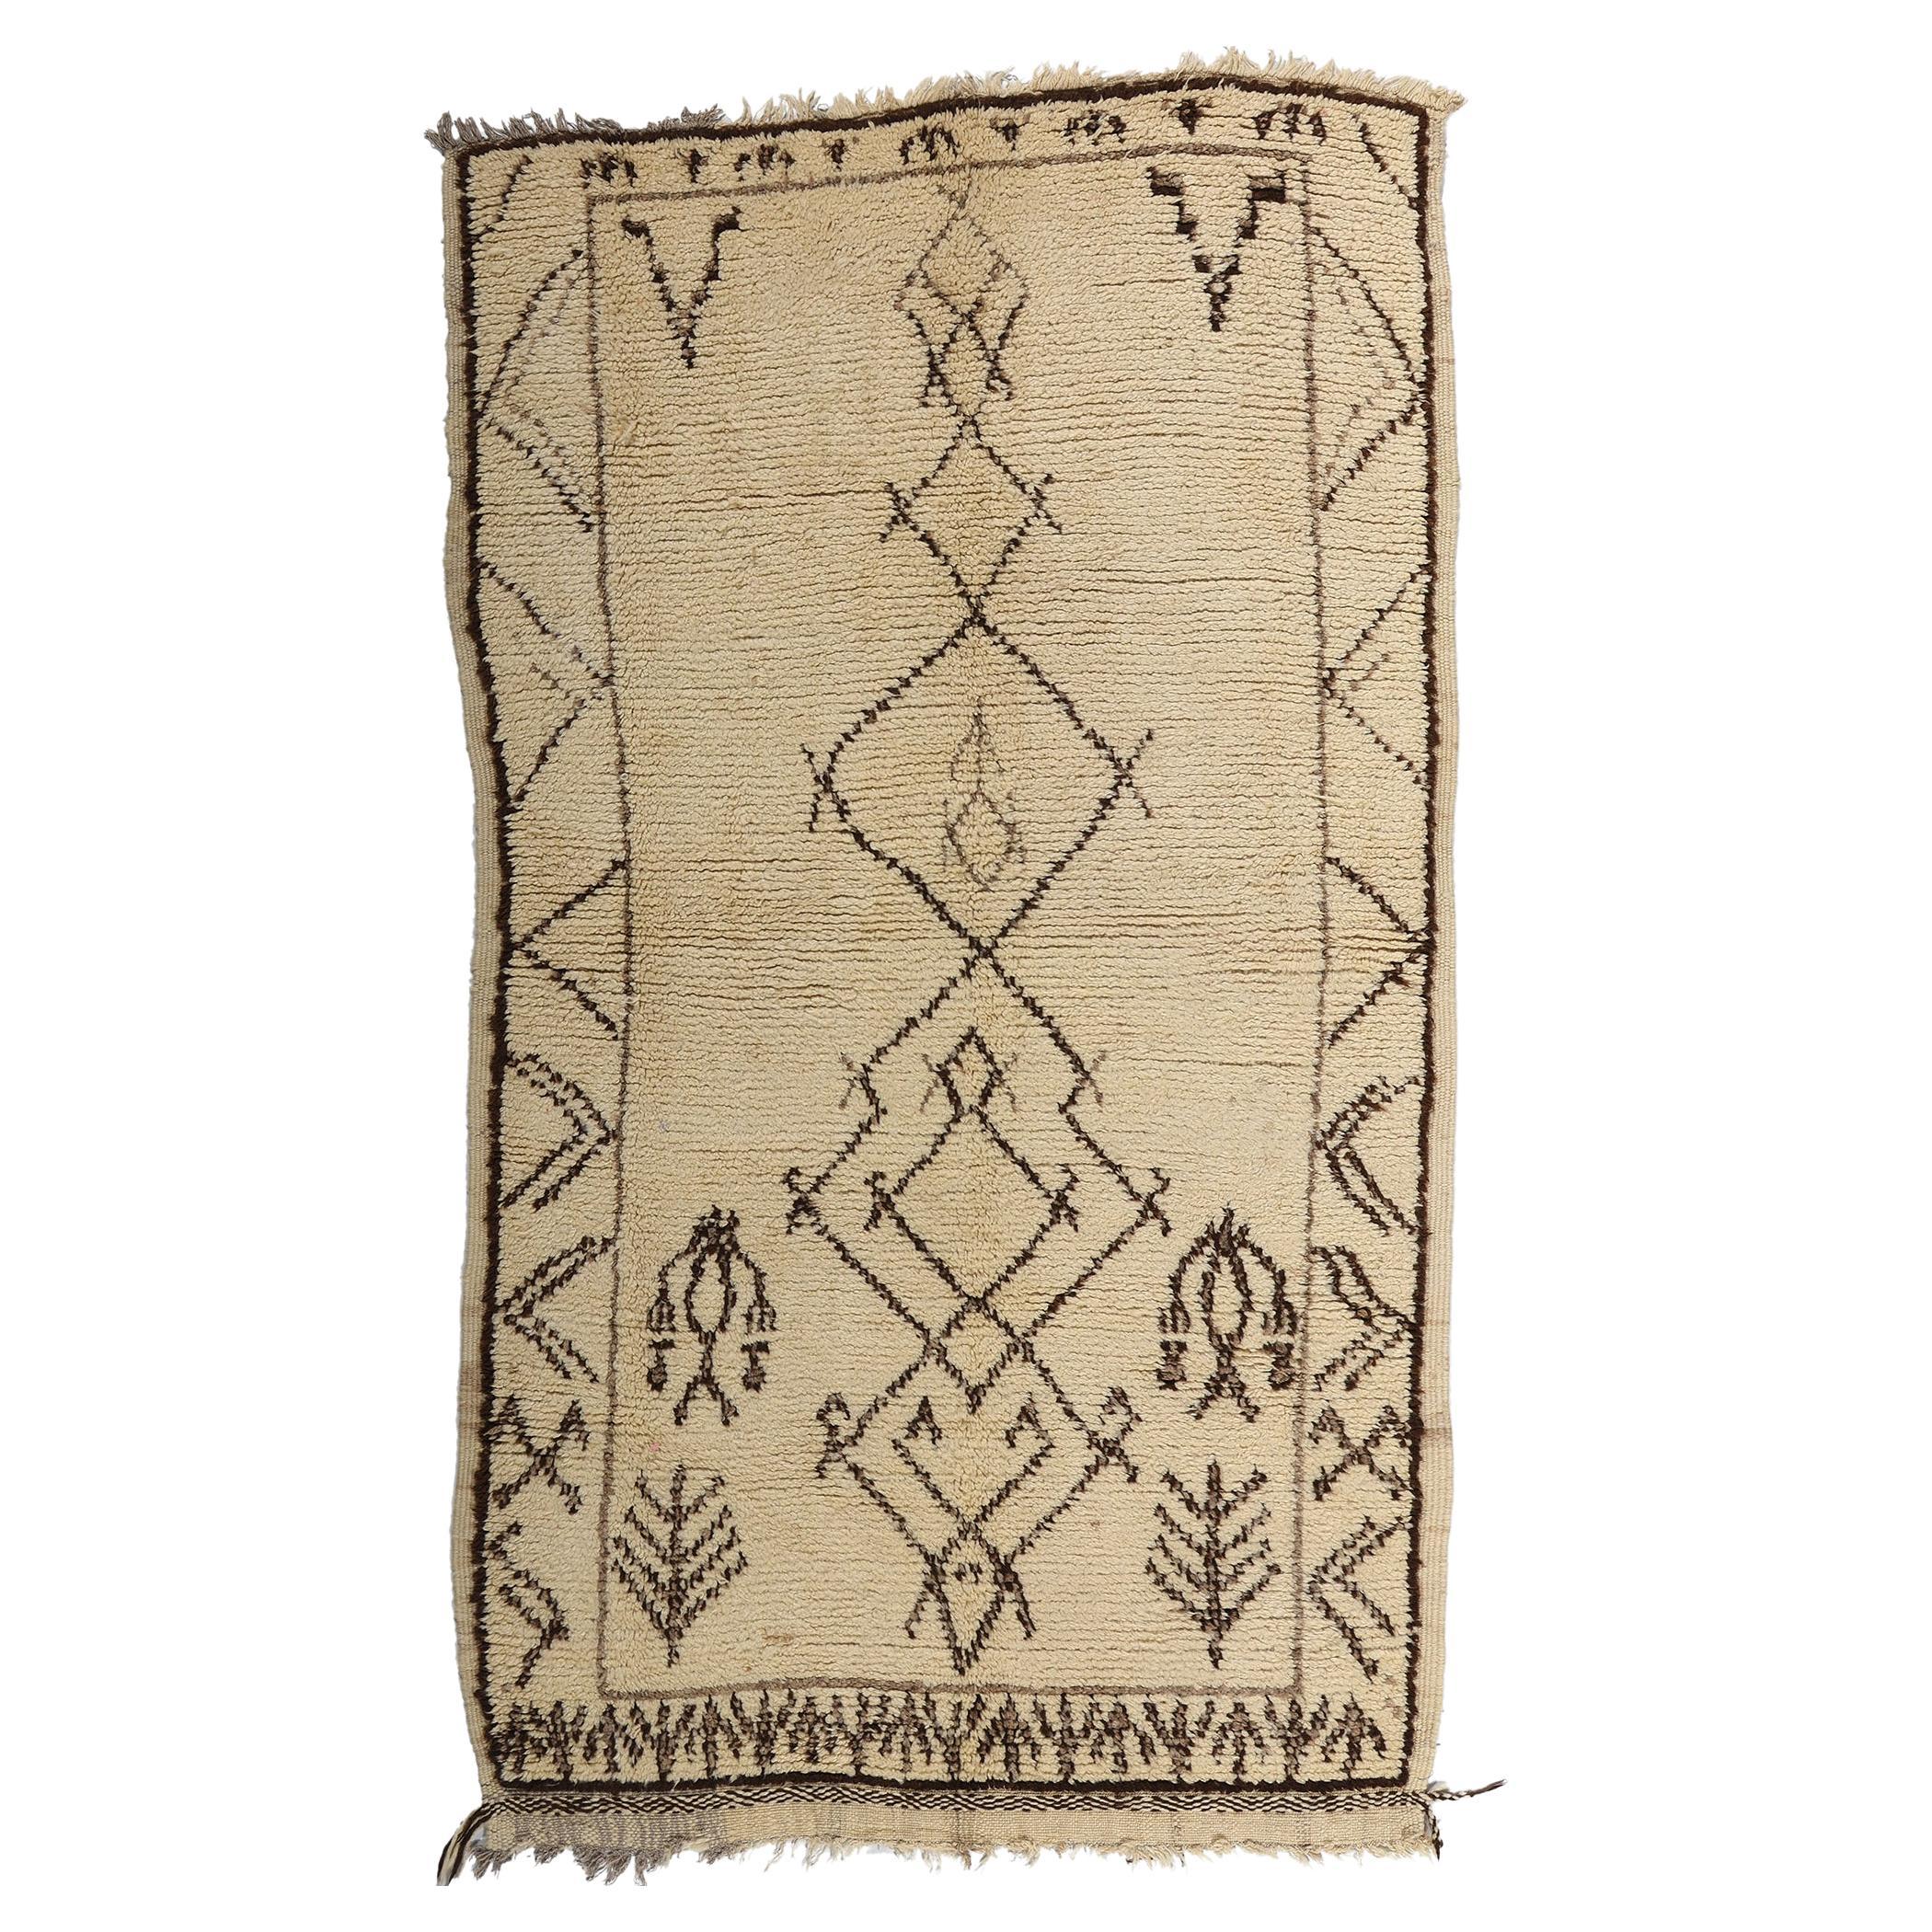 Neutraler marokkanischer Azilal-Teppich im Vintage-Stil, Stammeskunst-Enchantment Meets Shibui-Design